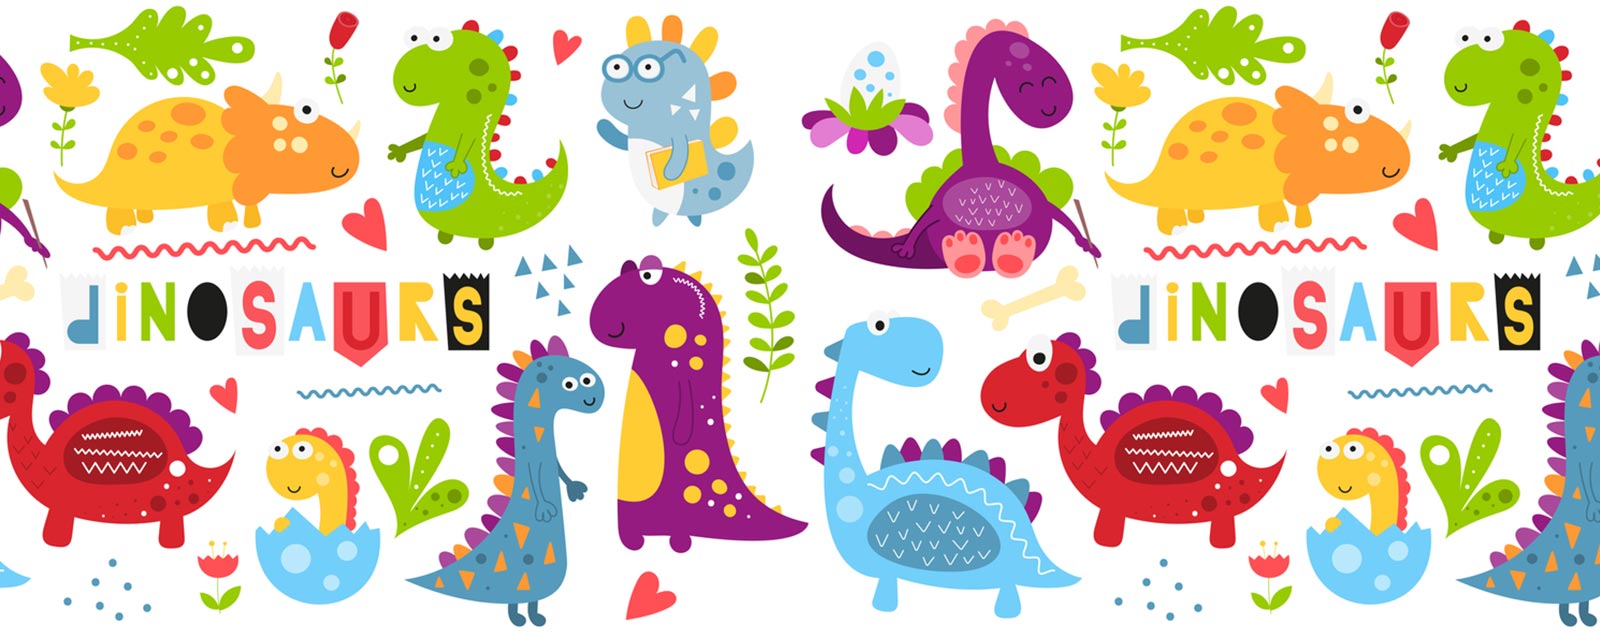 images-Dinosaur-children